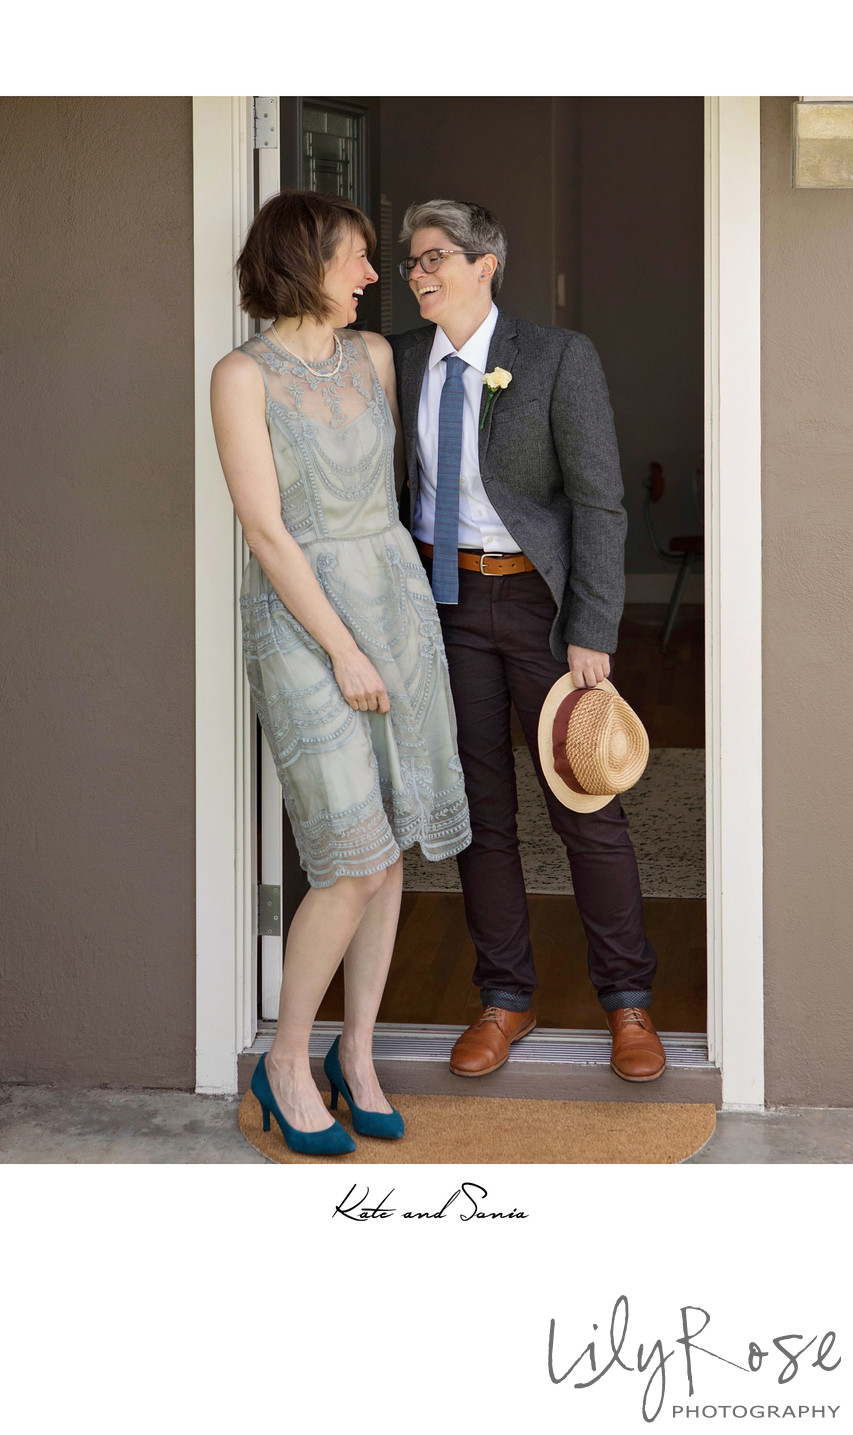 Best Micro Wedding Photography Cute Gender Fluid Couple